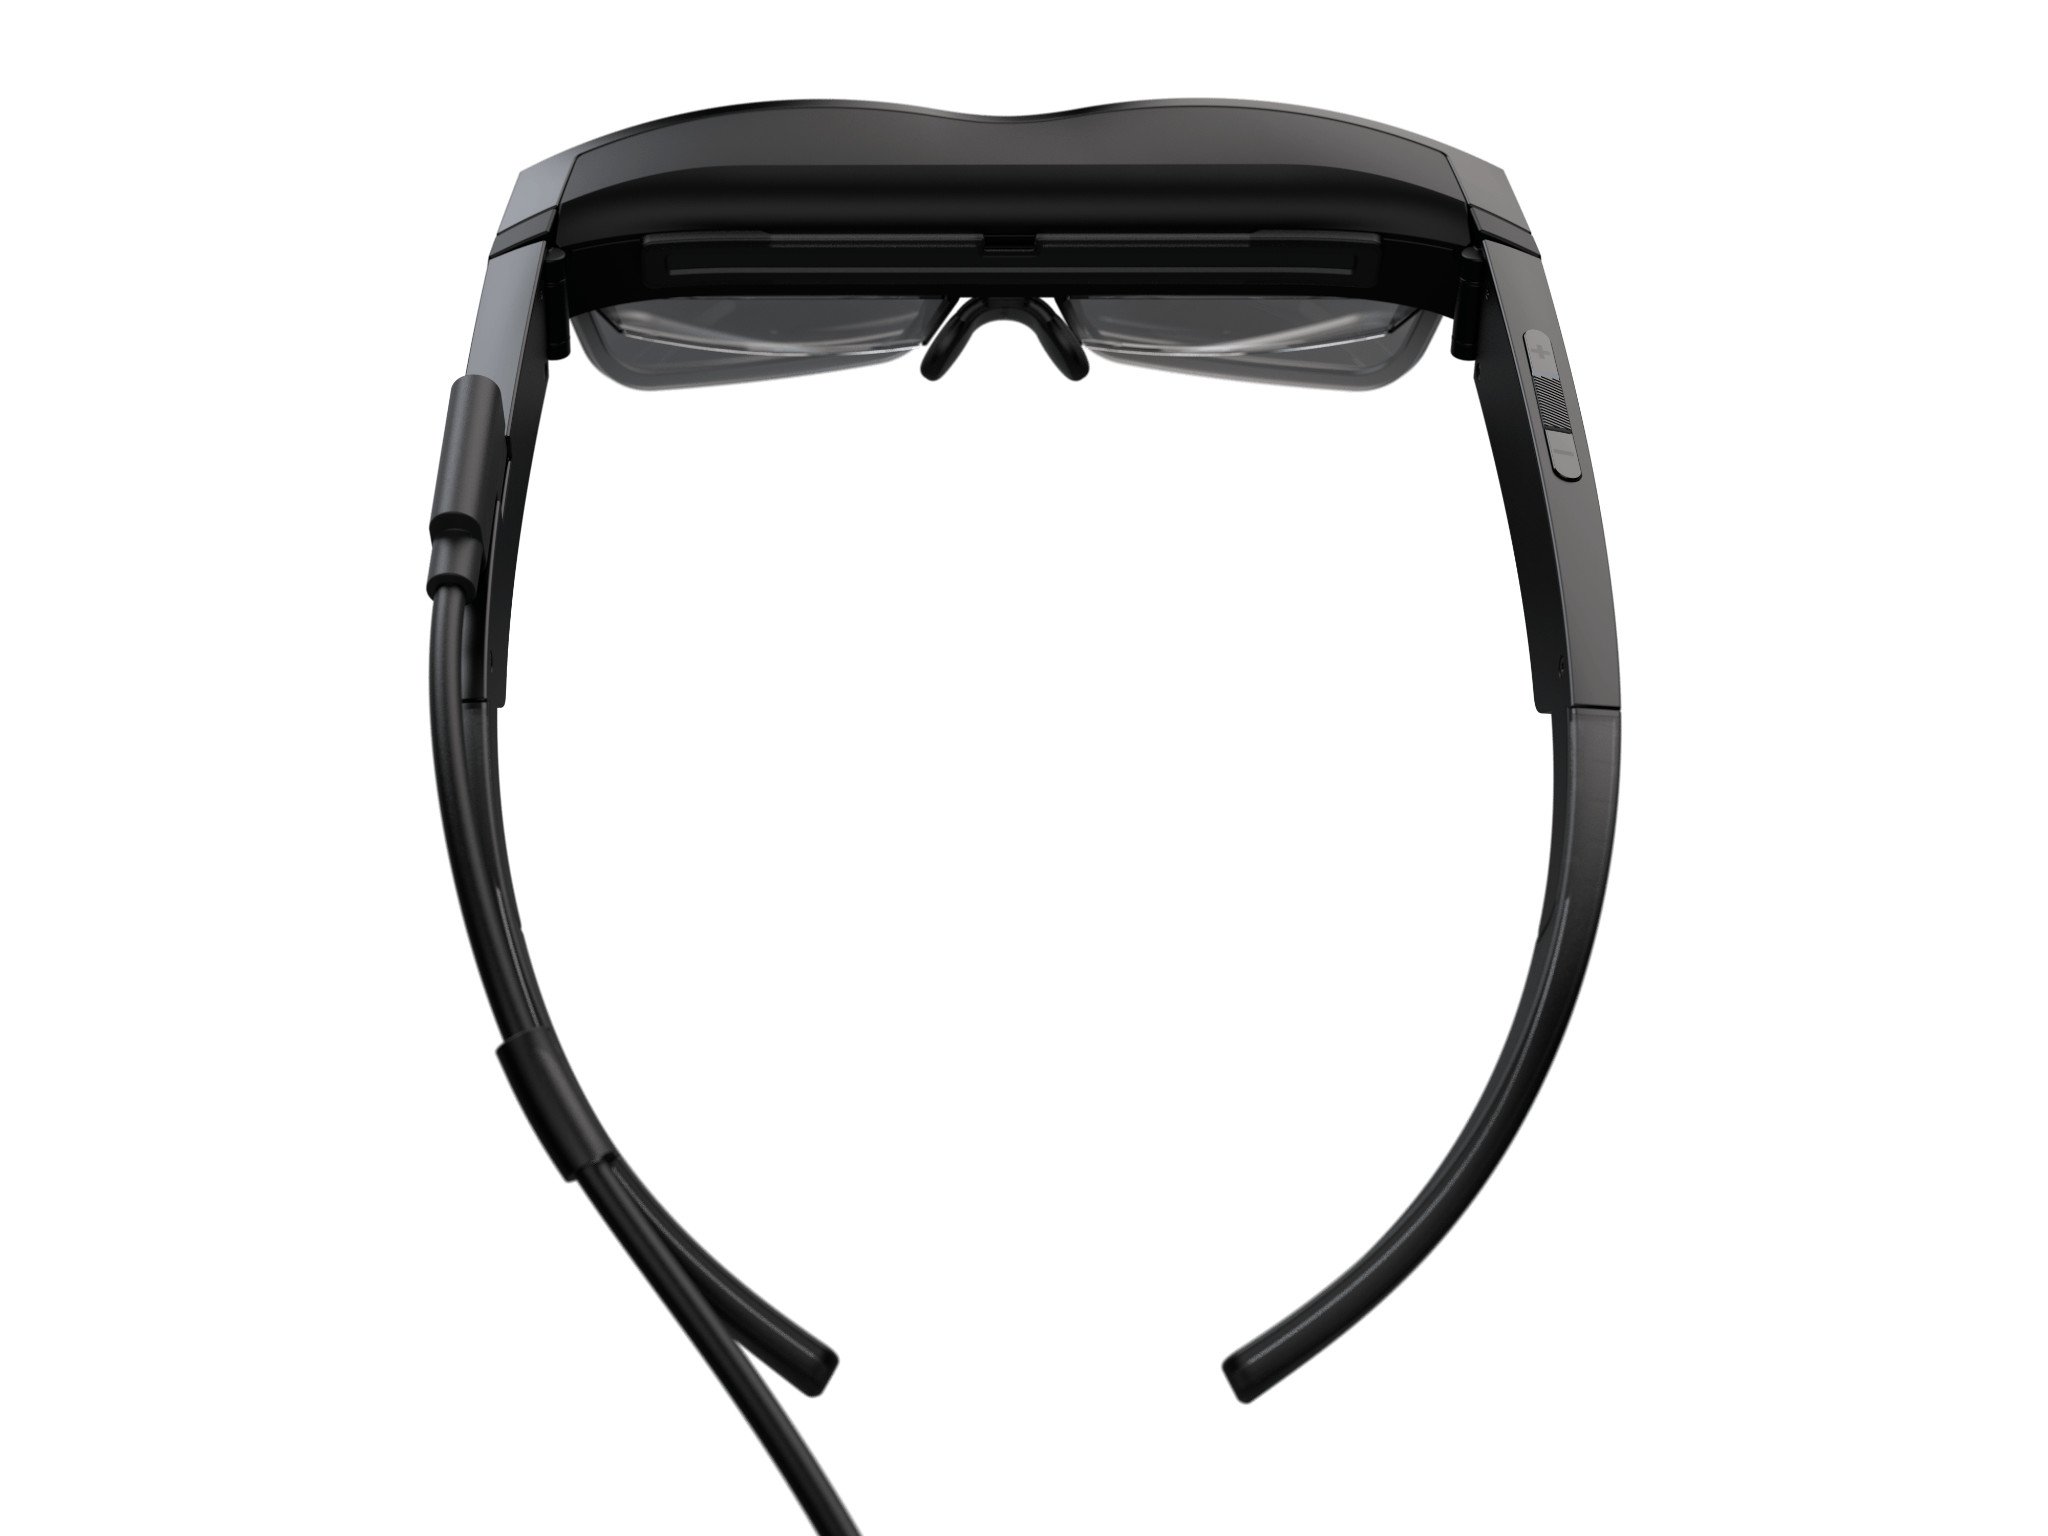 ThinkReality A3 smart glasses top